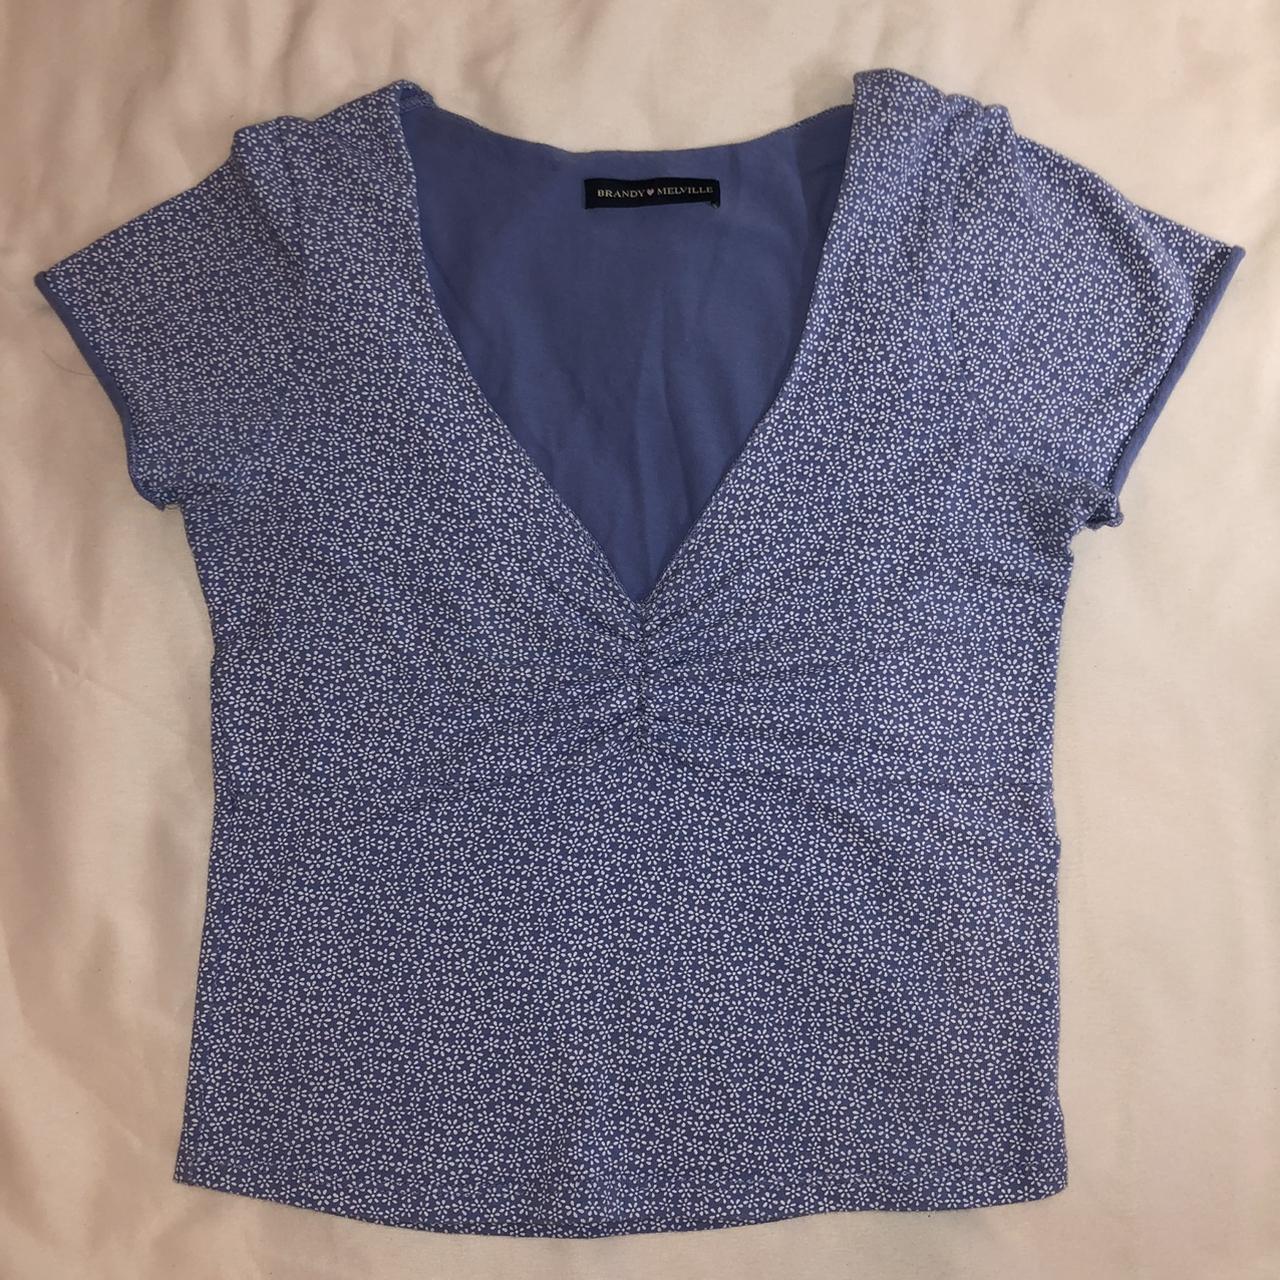 Brandy Melville Gina Light Blue Floral Short Sleeve V-Neck Top One Size